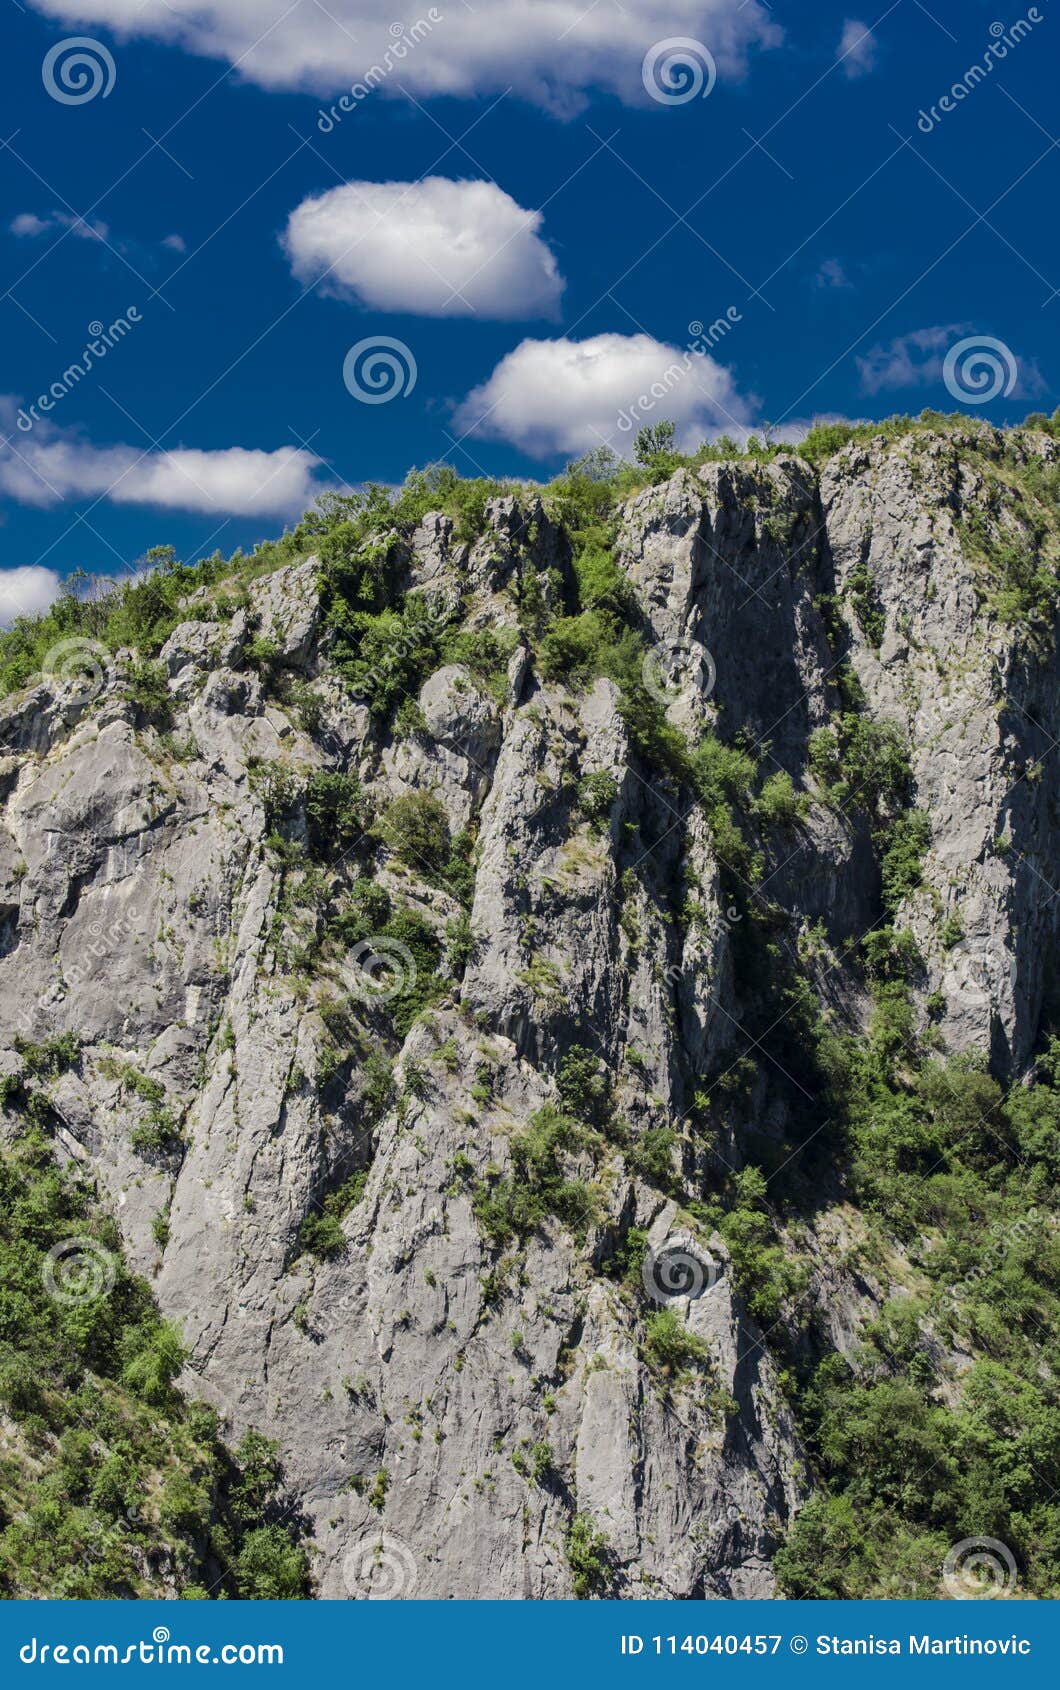 danube gorge at djerdap in serbia